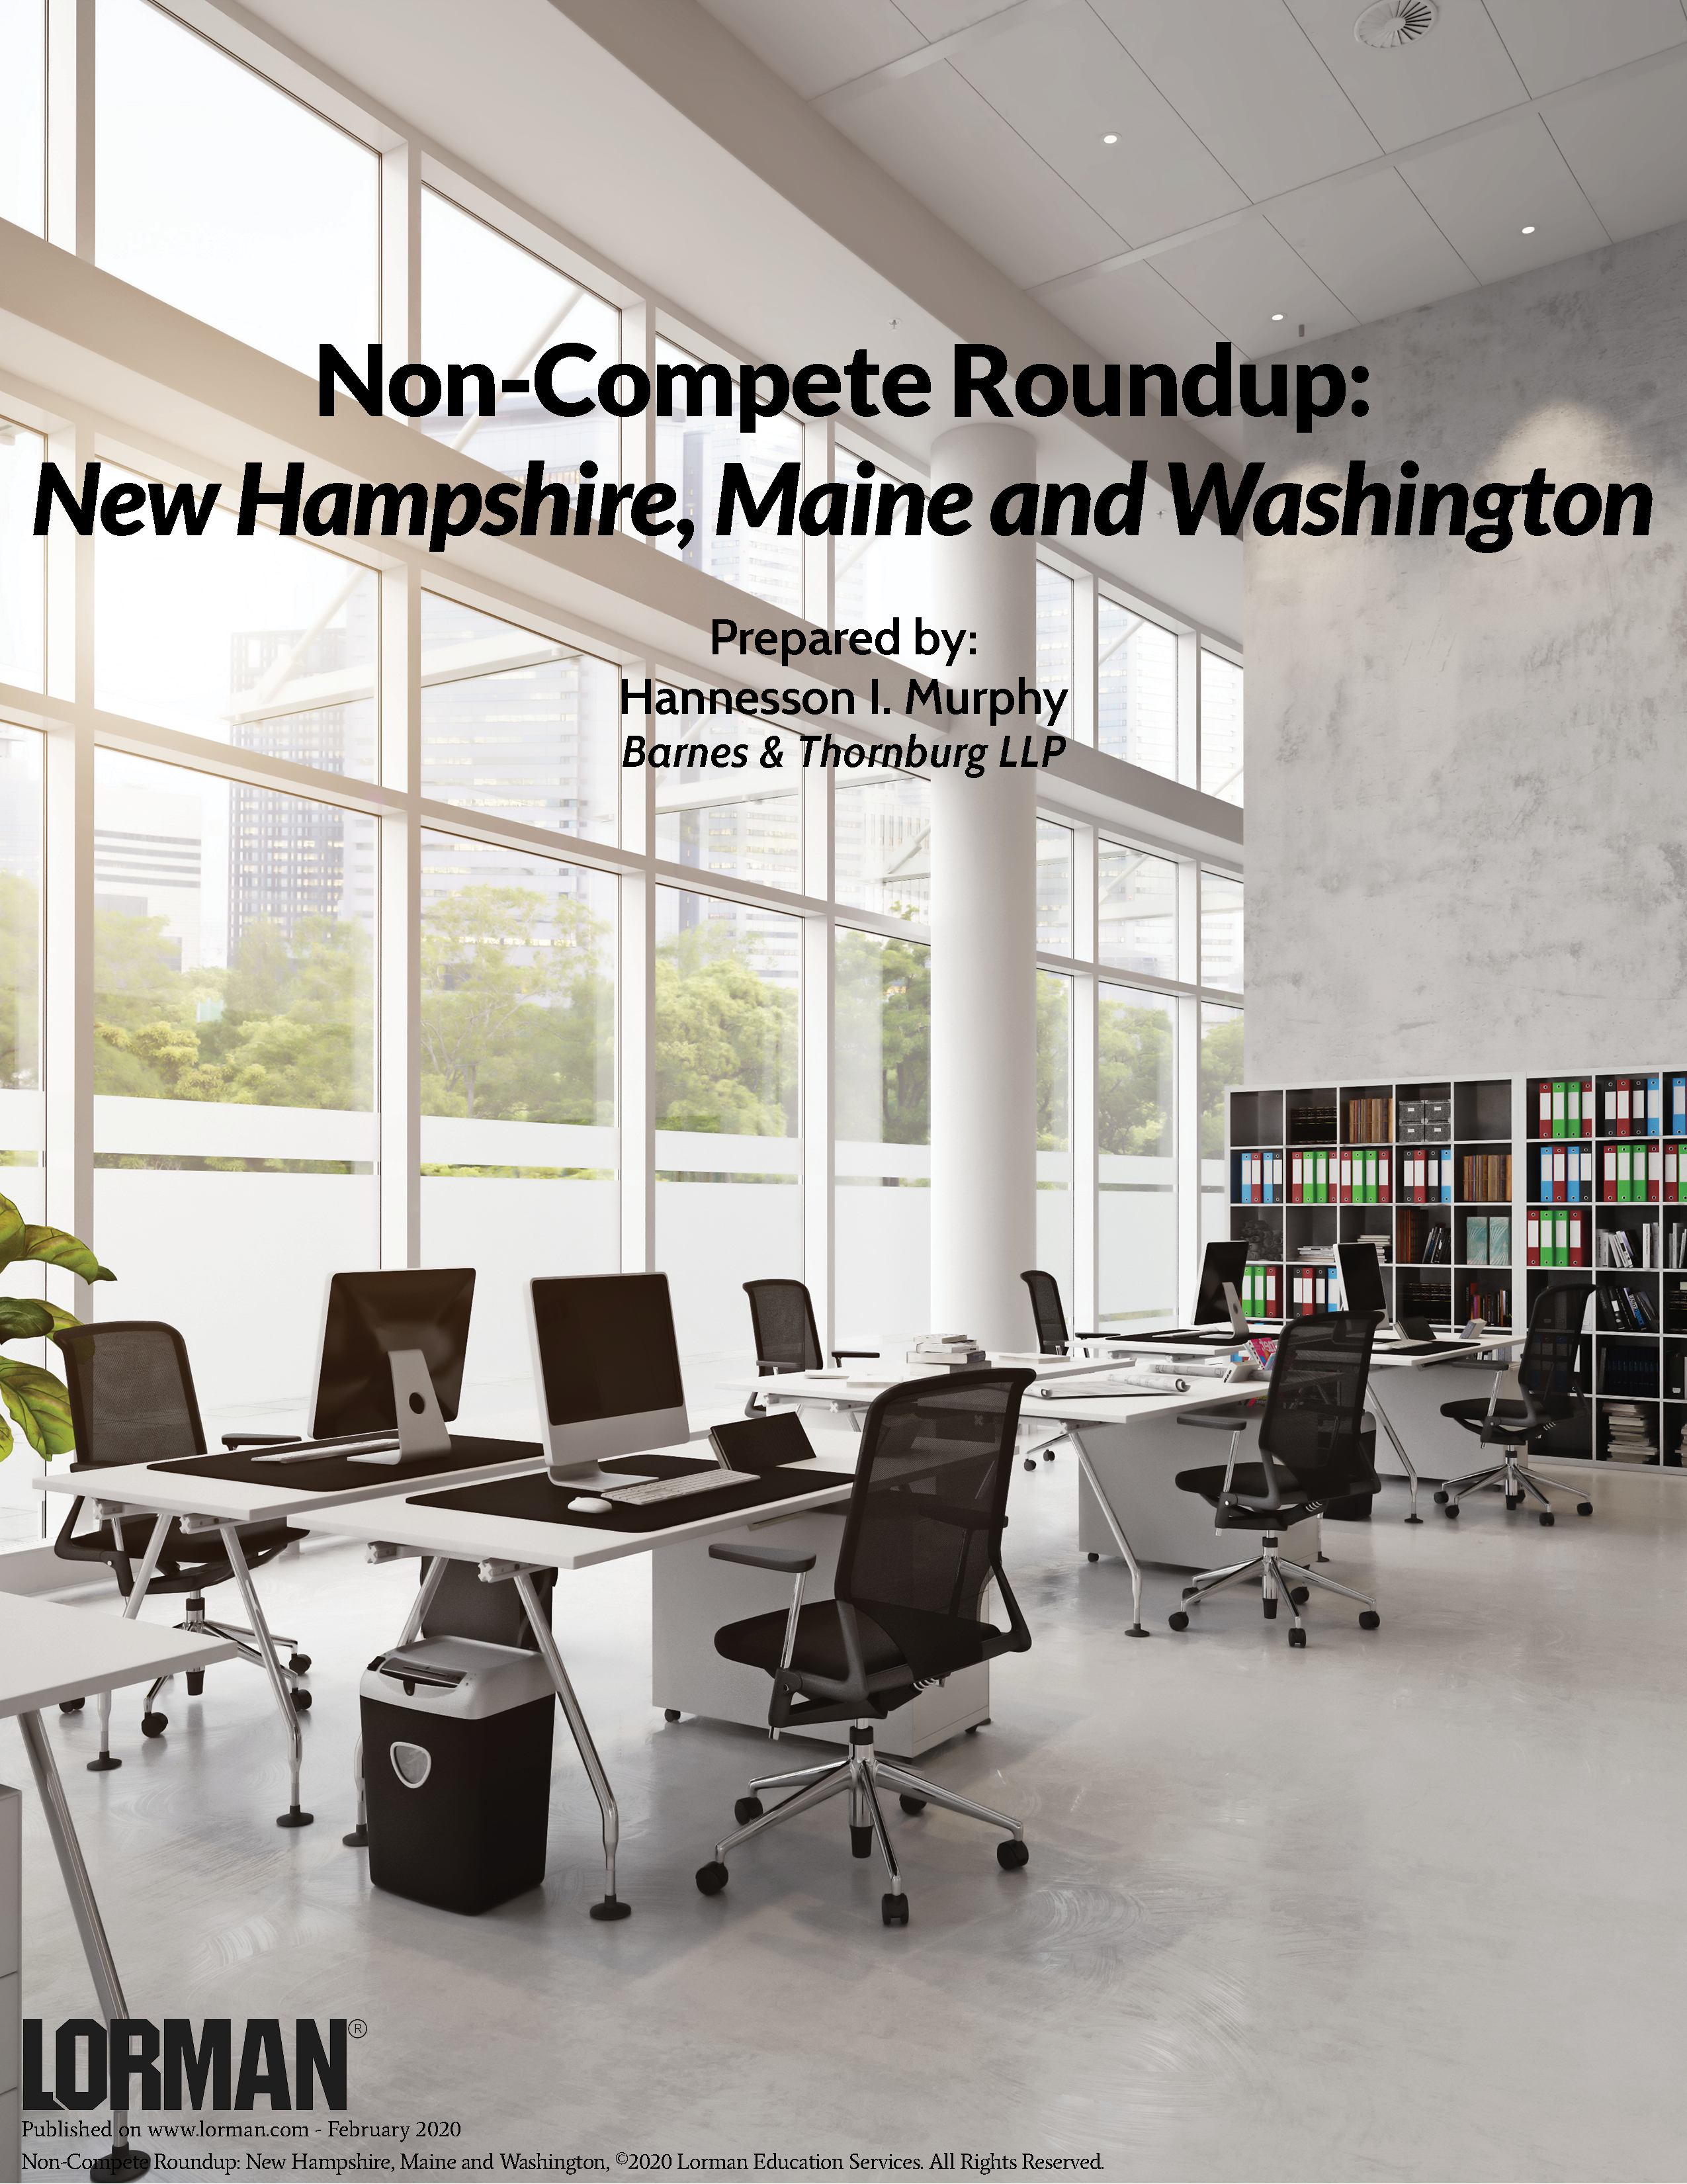 Non-Compete Roundup: New Hampshire, Maine and Washington